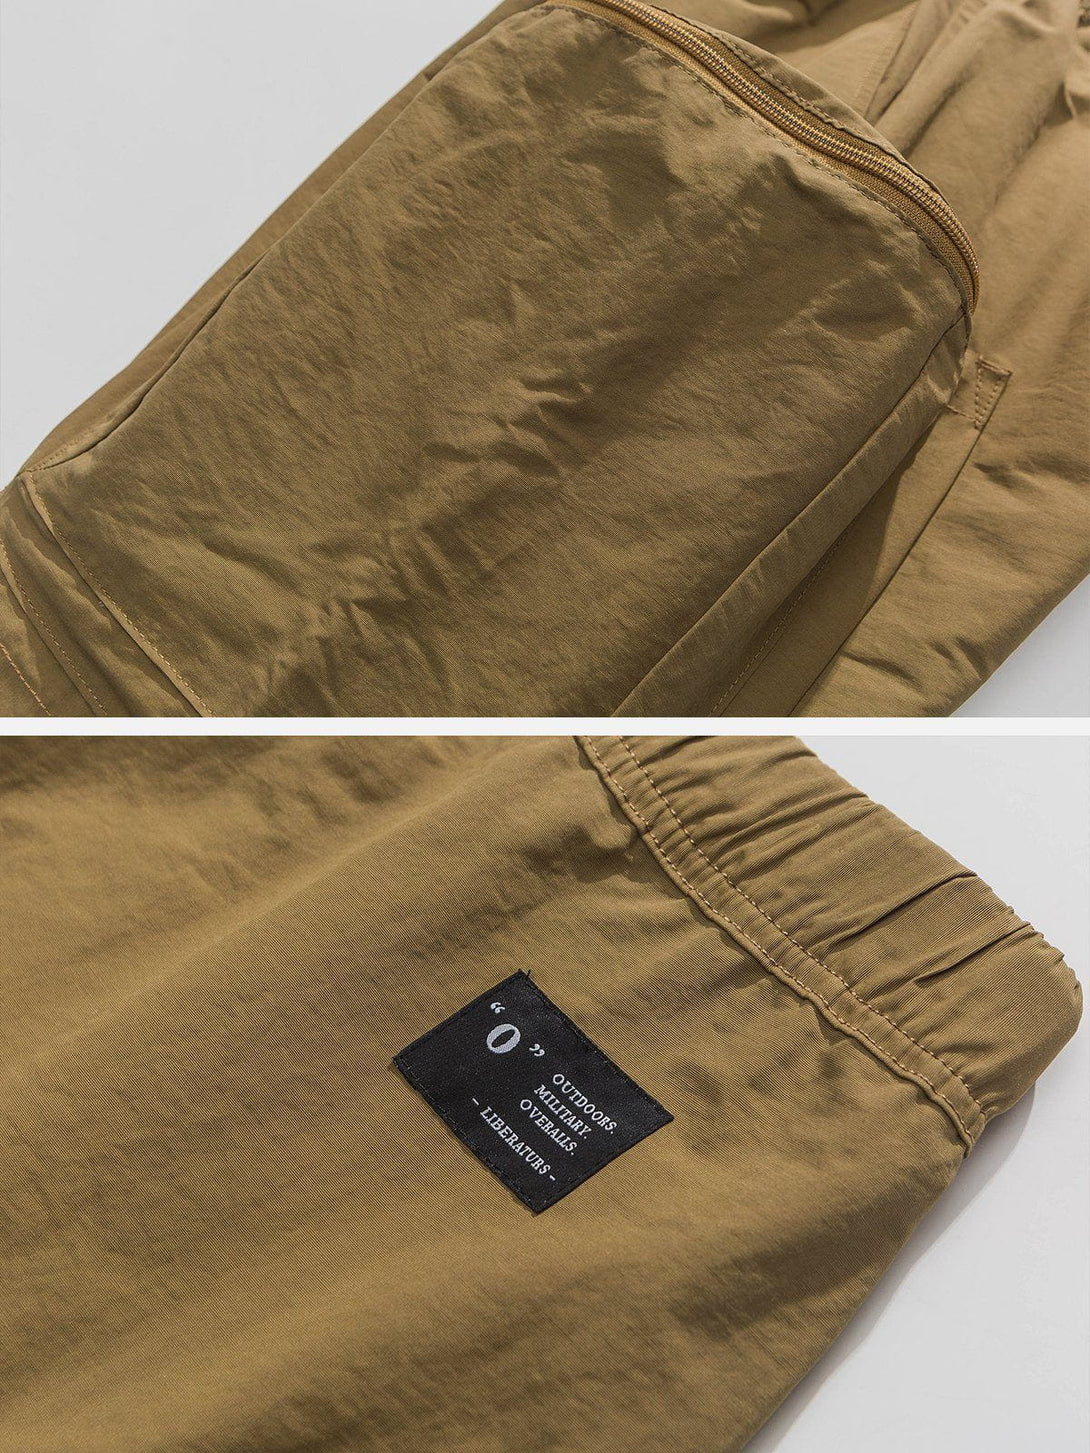 AlanBalen® - Discreet Side Pockets Shorts AlanBalen